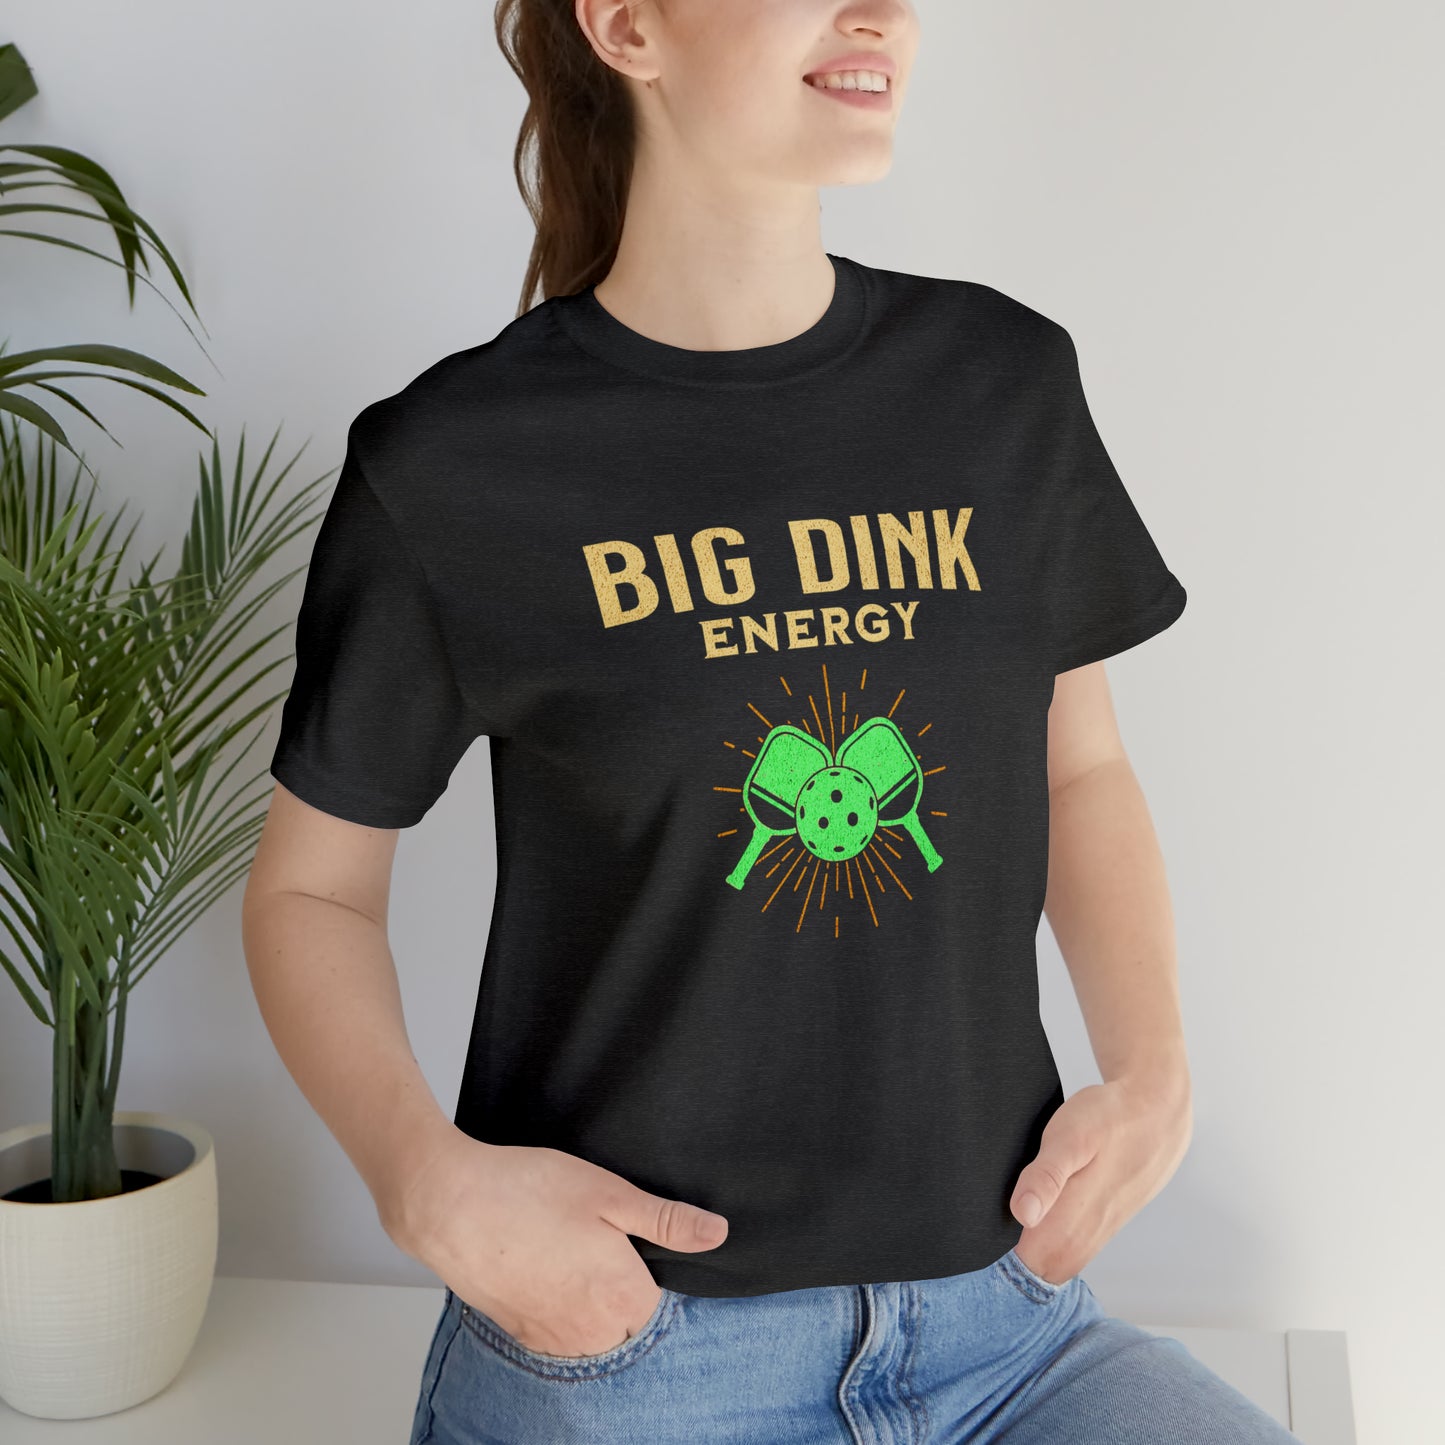 Big Dink Energy - Vibrant Pickleball T-Shirt